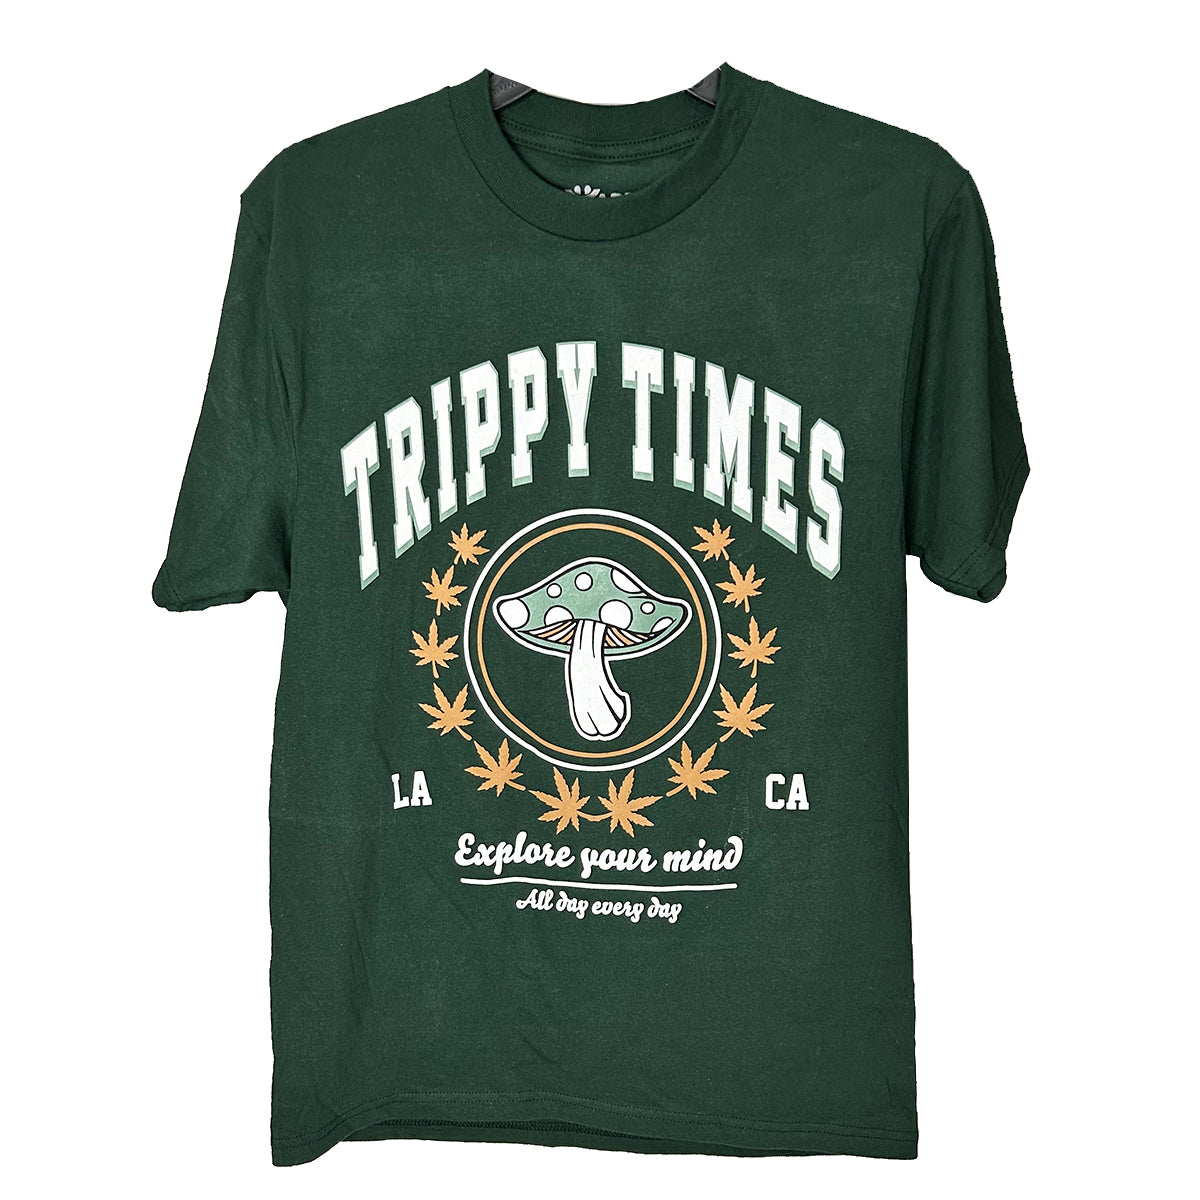 Trippy Times Short Sleeve T-SHIRT 100% Cotton - Pack of 6 Units 1S, 2M, 2L, 1XL